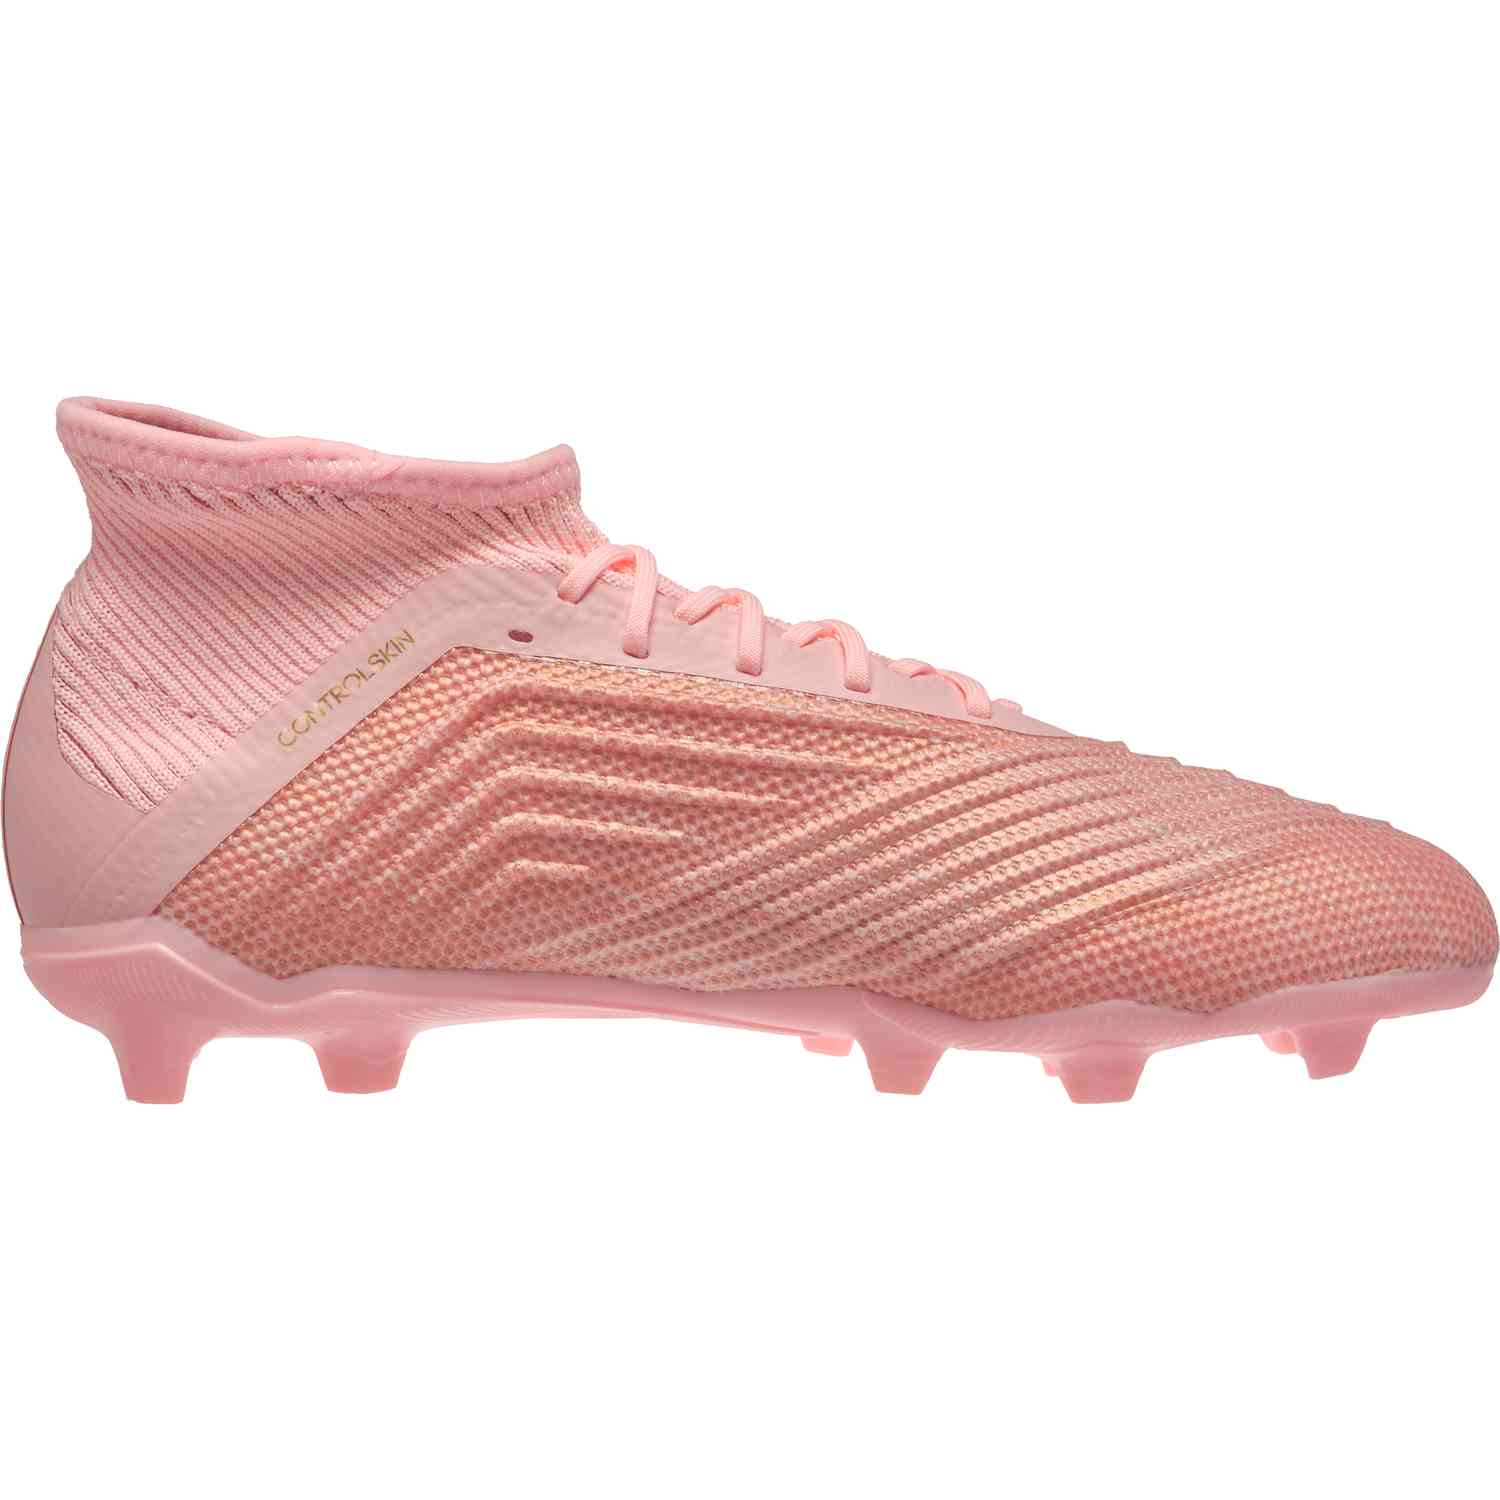 Adidas Predator 181 Fg Football Boots Pink